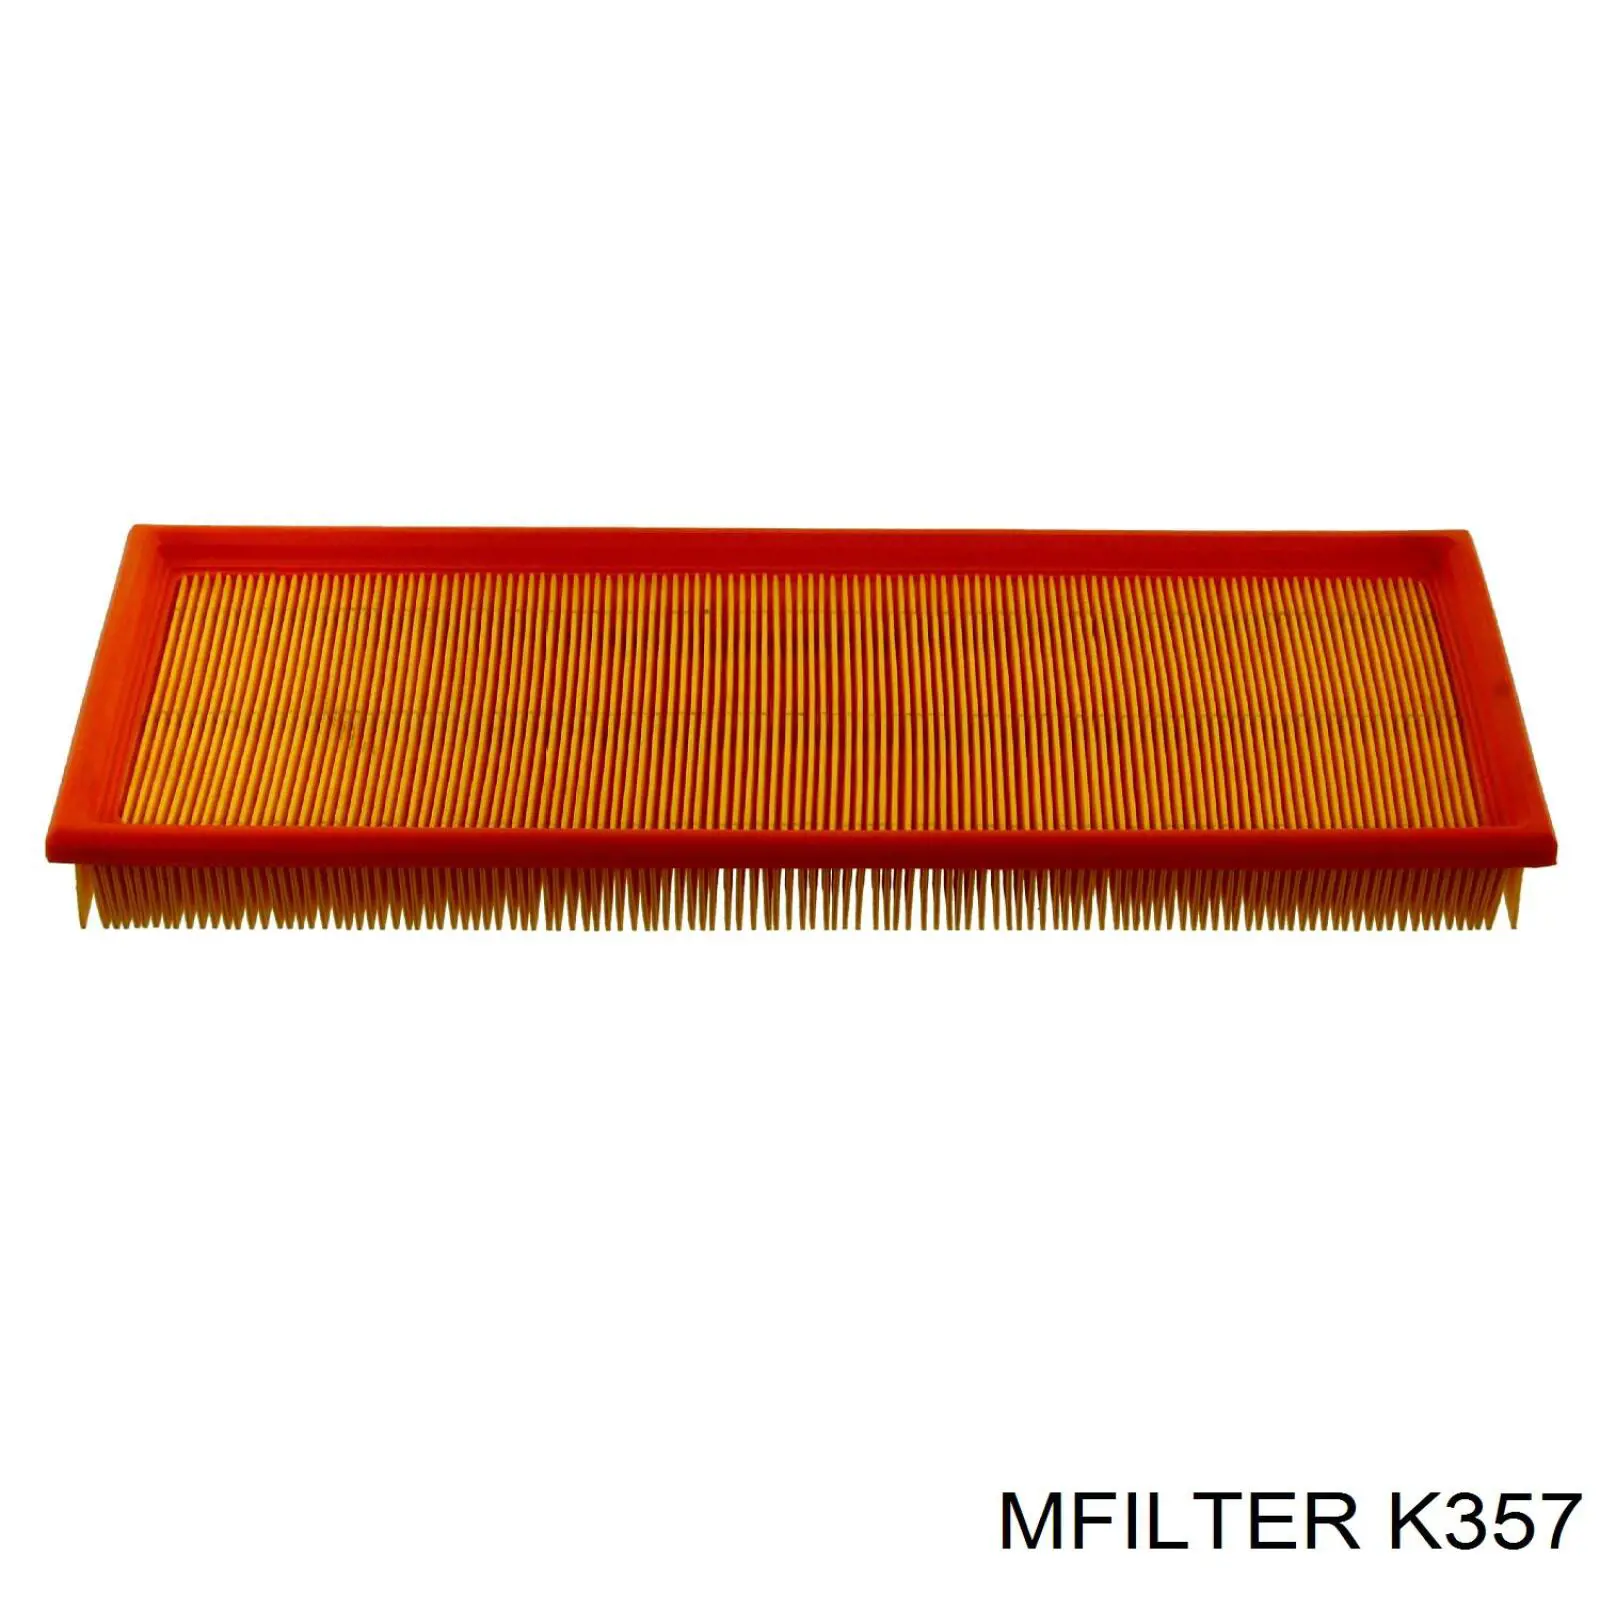 K357 Mfilter filtro de aire